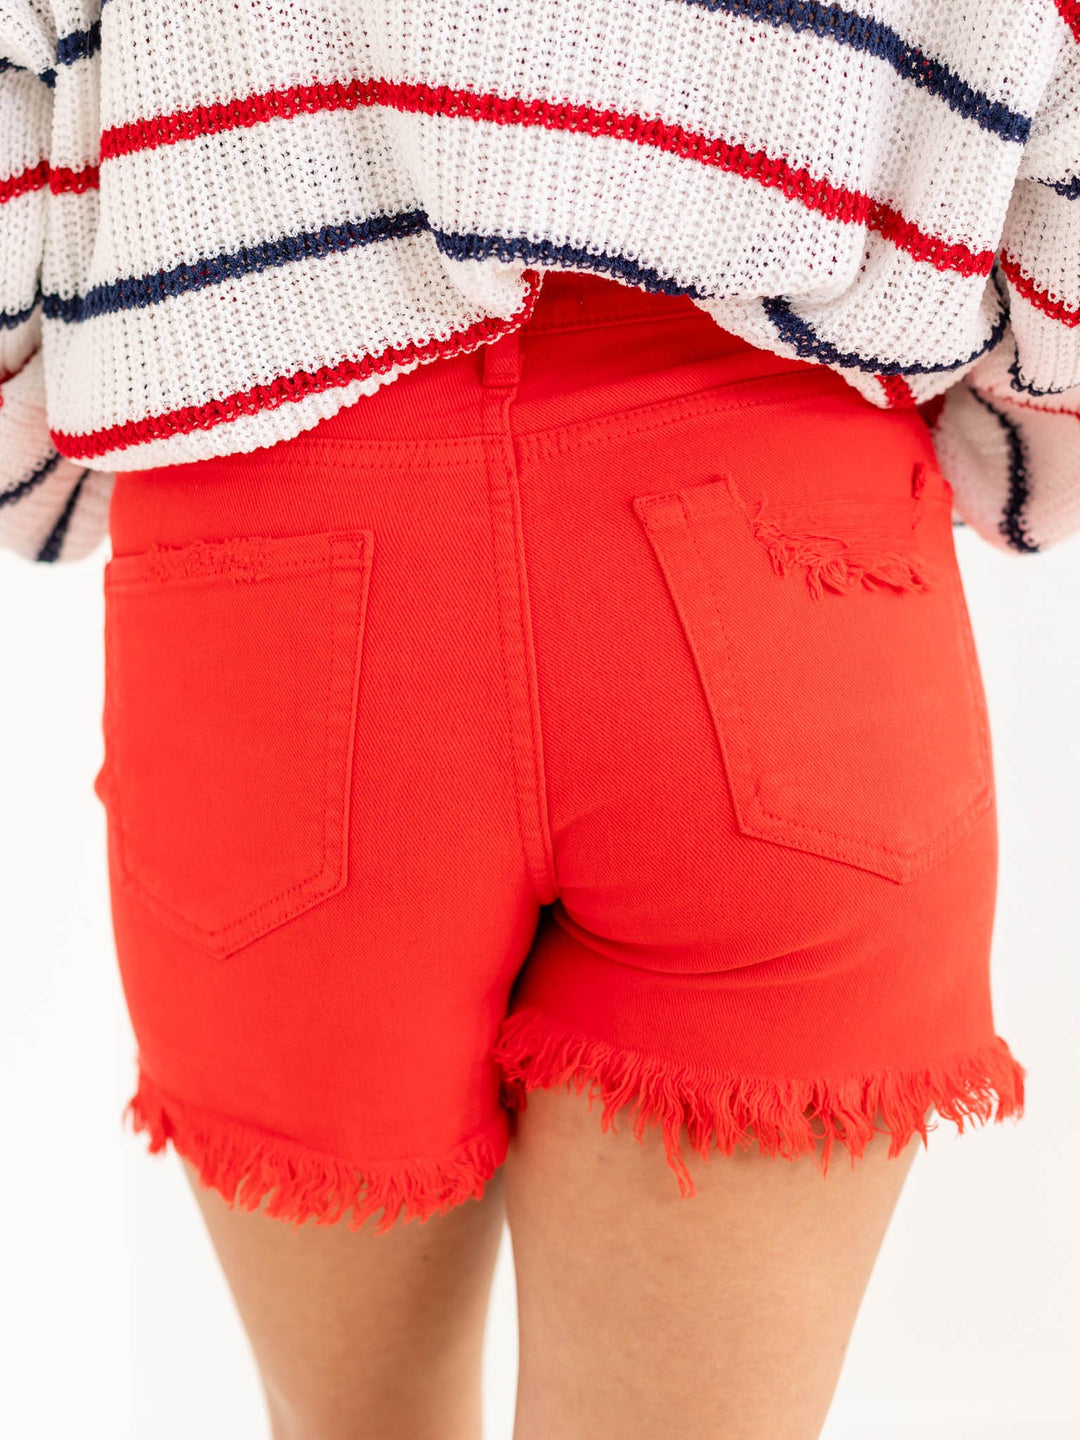 RISEN Fiesta High Rise Distressed Detail ShortsDenim Shorts/Skirts